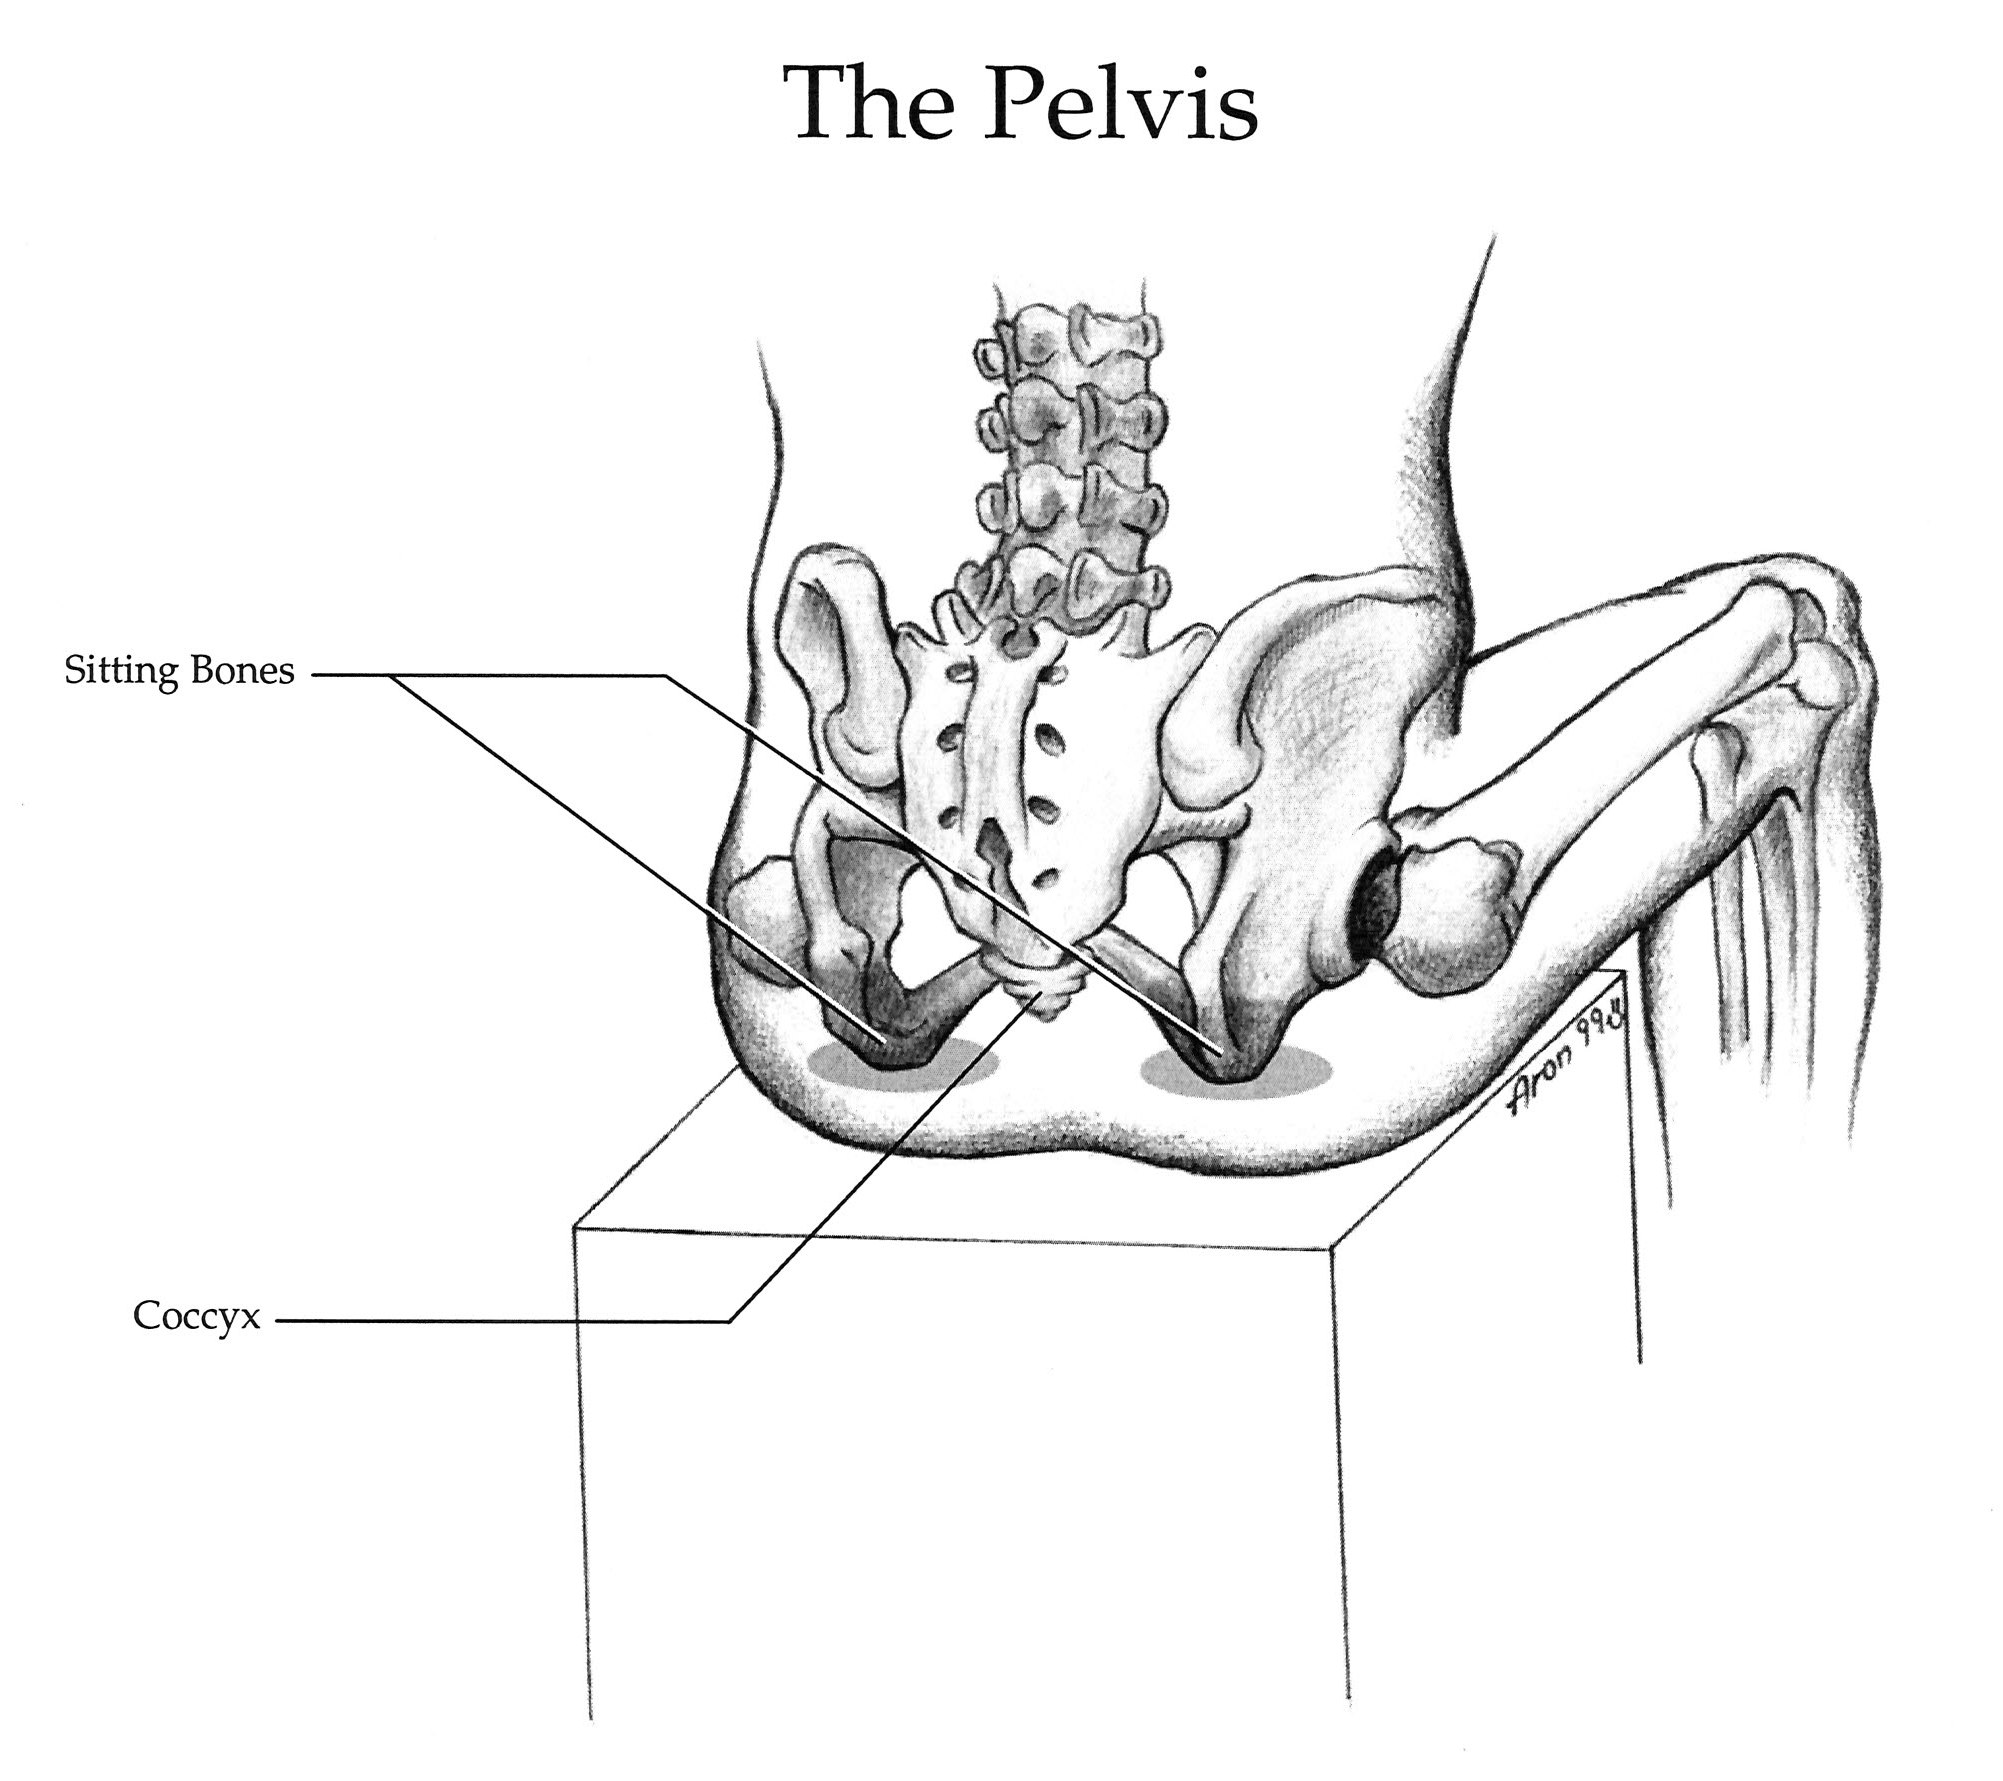 illustration of pelvis with rocker shaped sitting bones